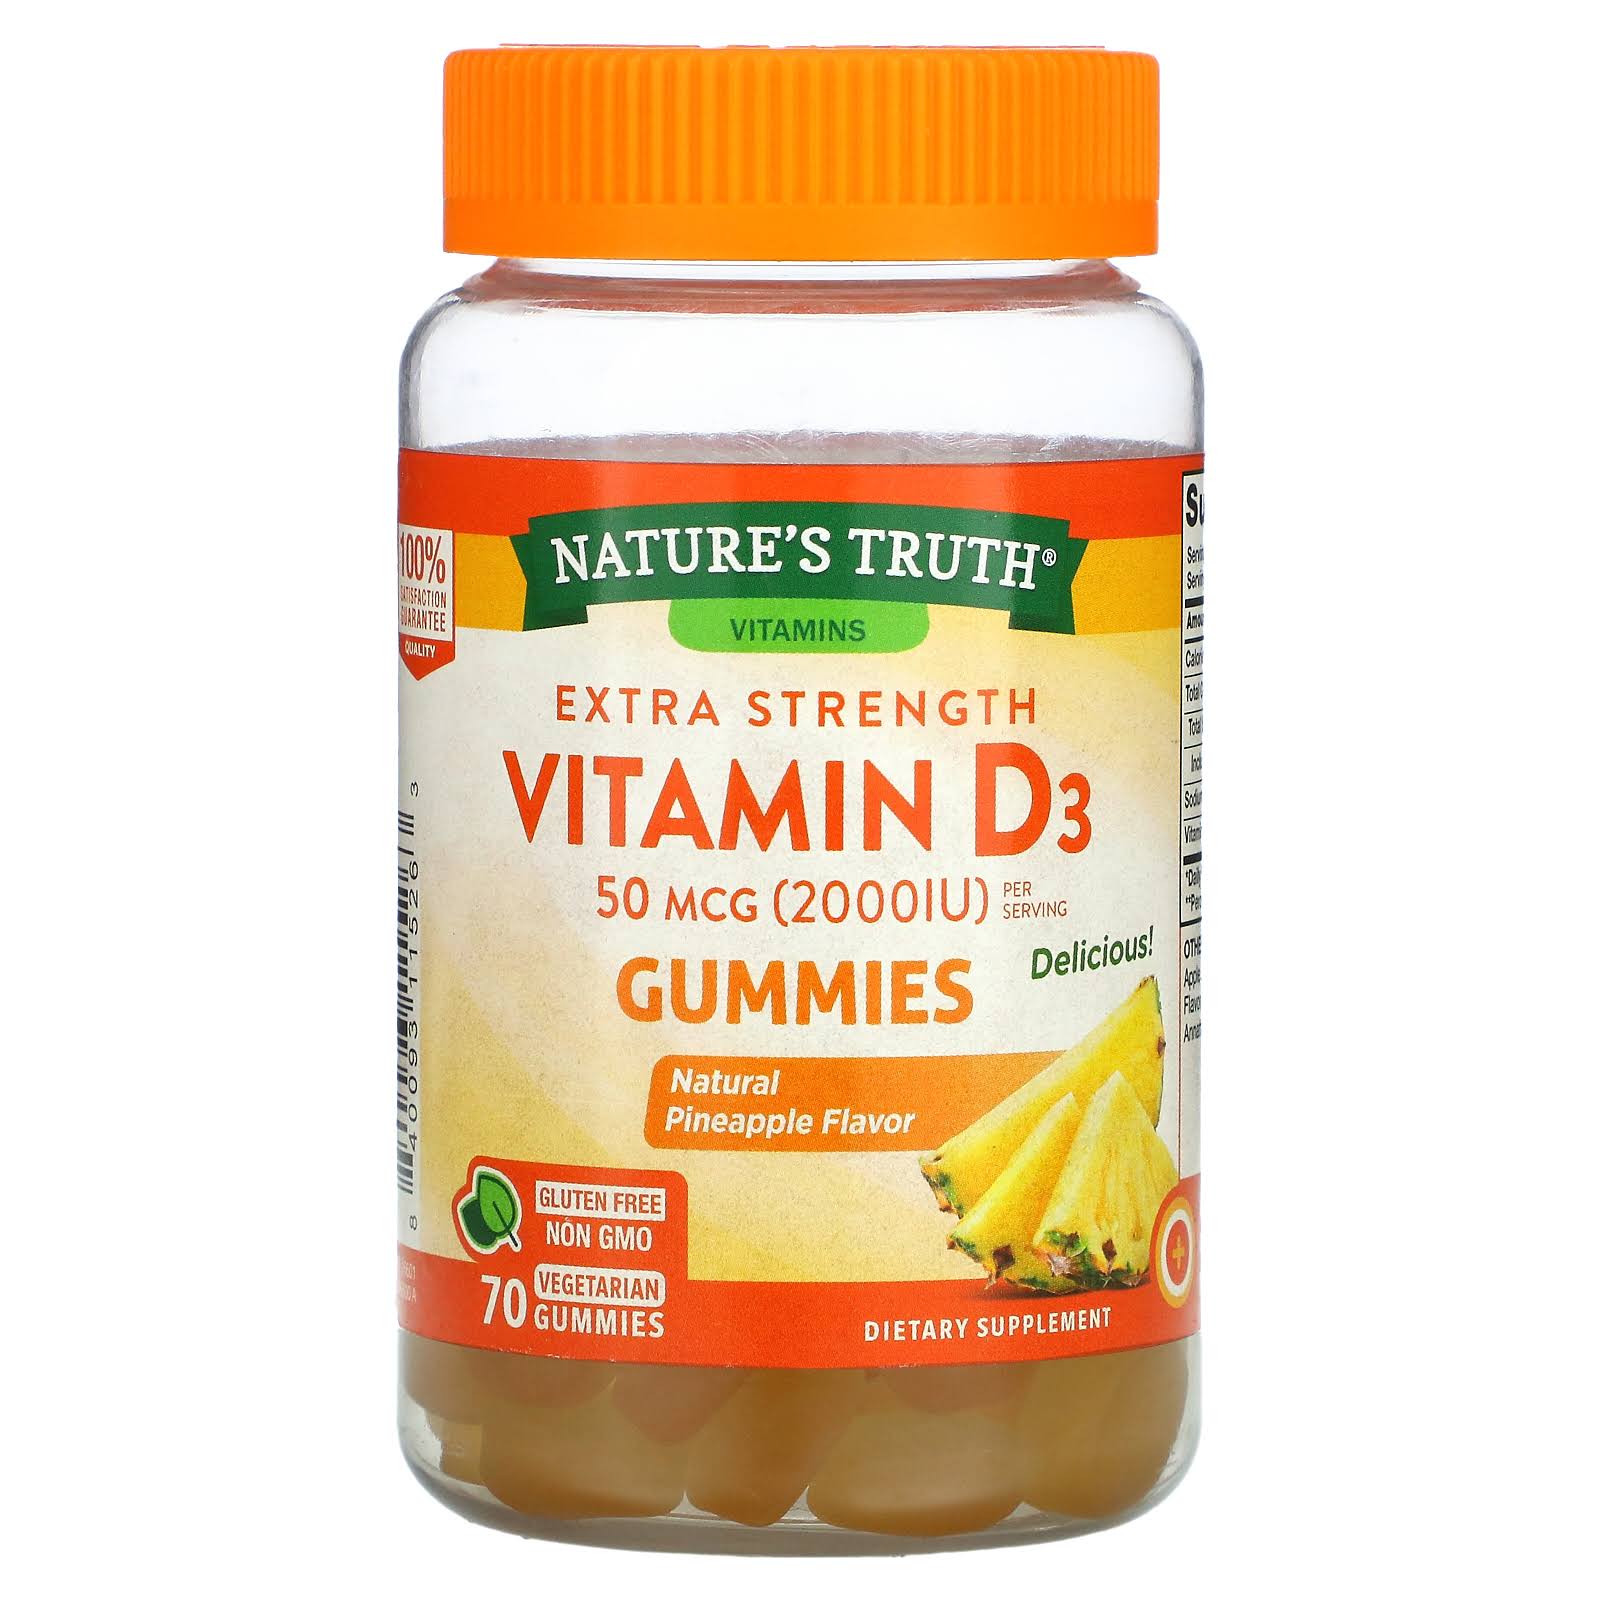 Nature's Truth Vitamin D3, Extra Strength, Natural Pineapple Flavor, 50 mcg, Gummies - 70 ea